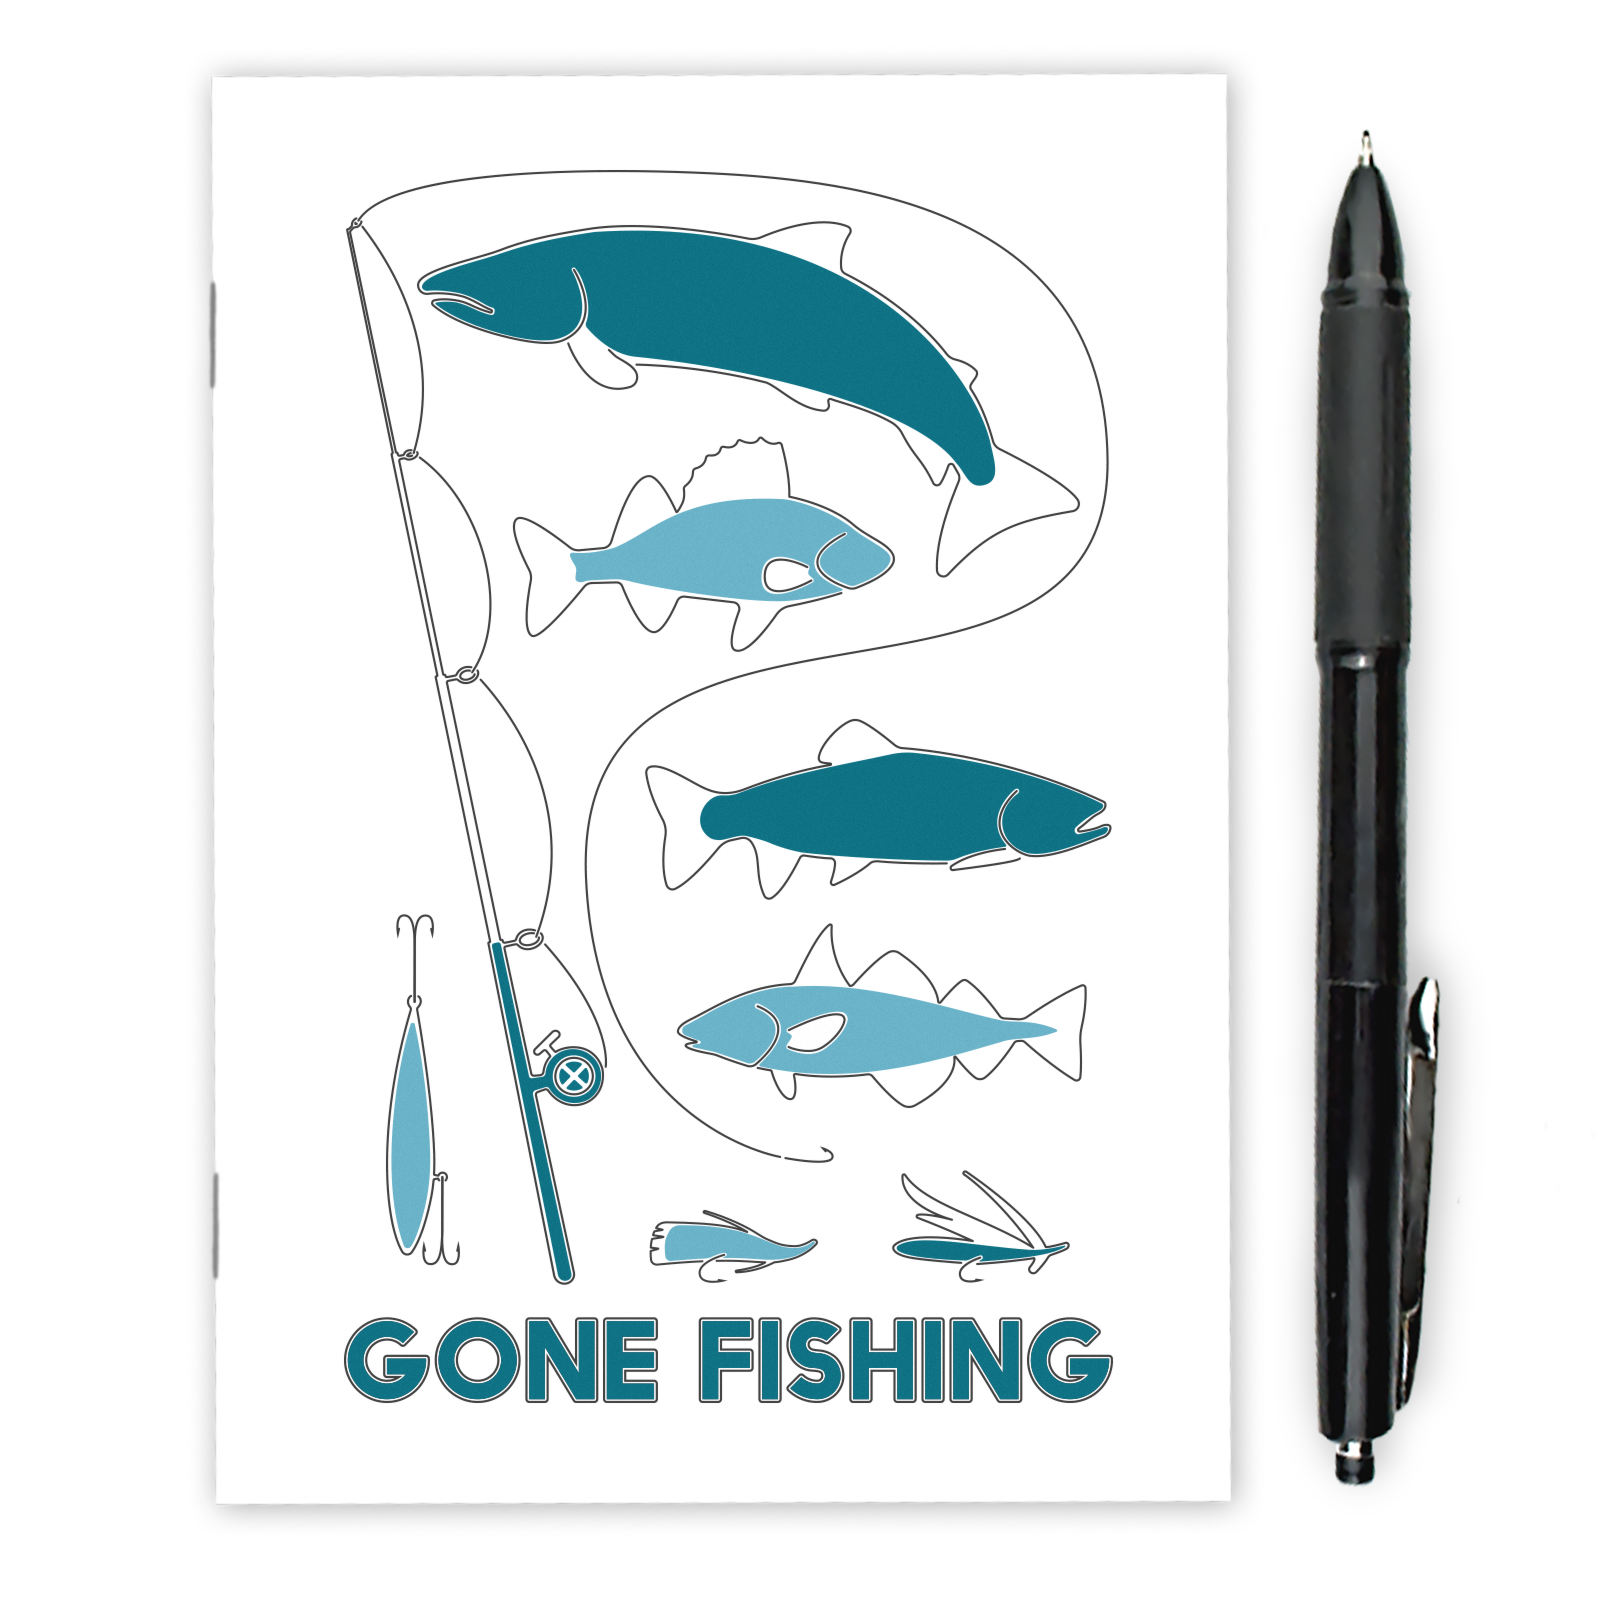 Fishing notebook